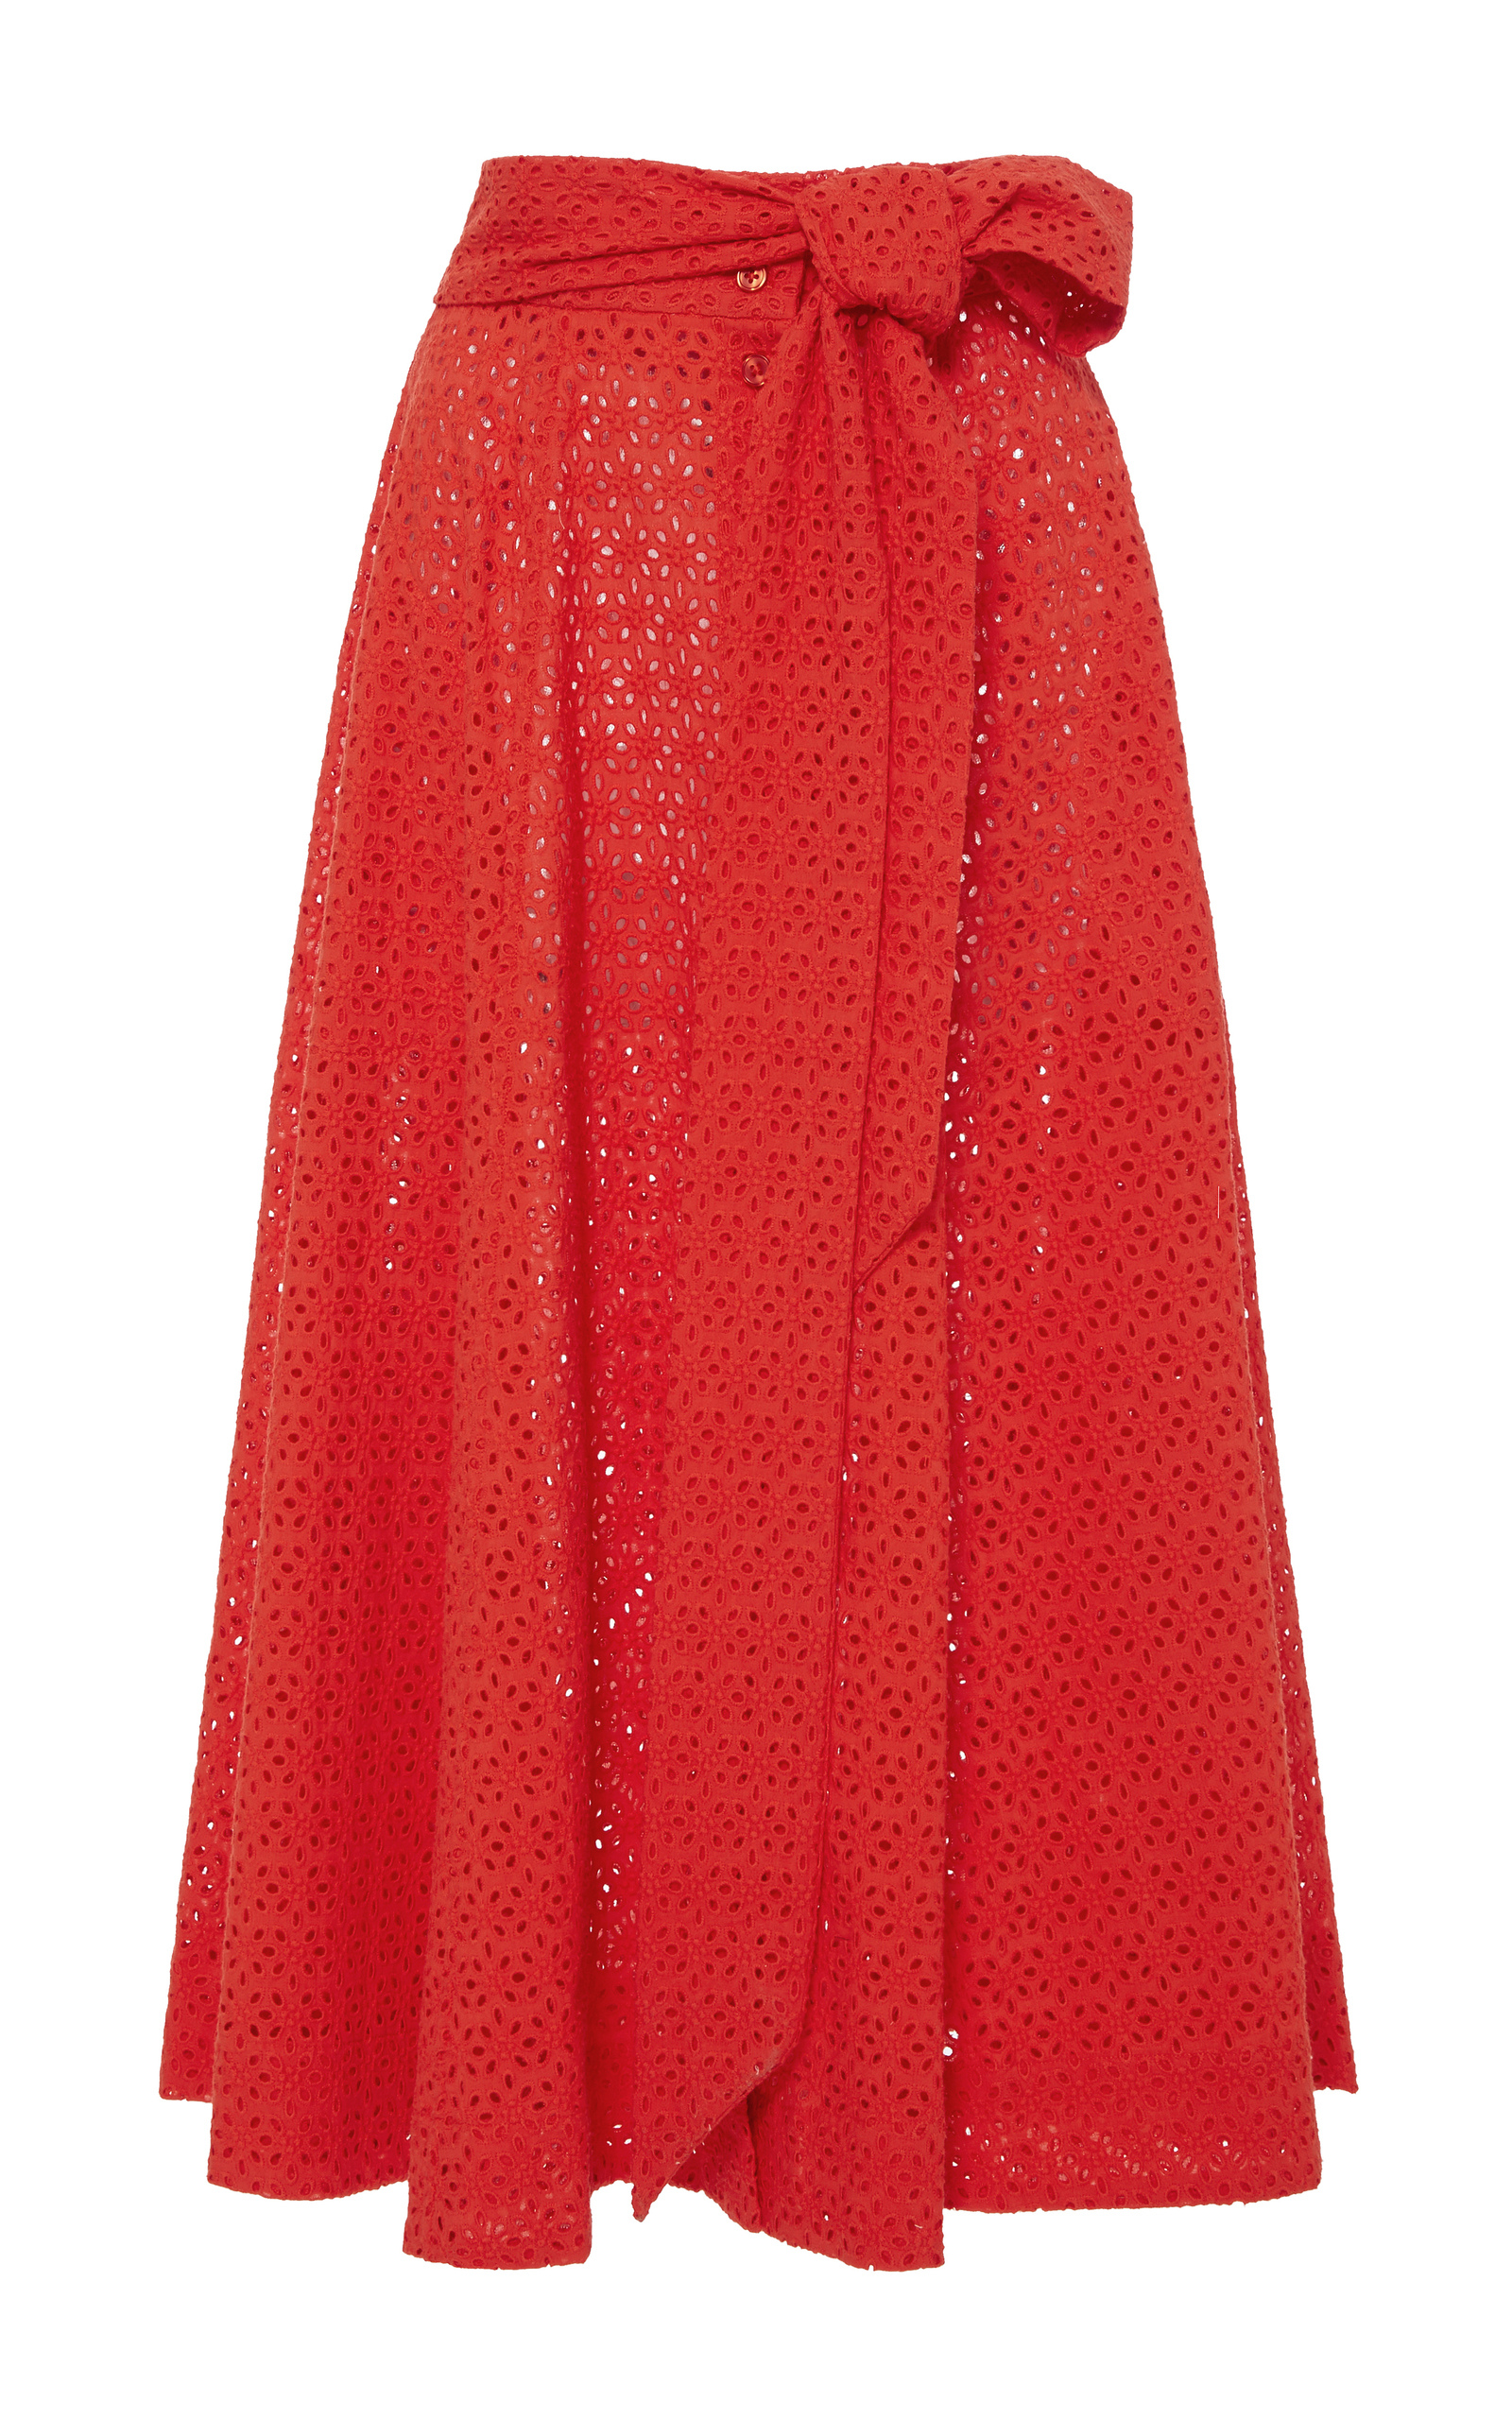 large_lisa-marie-fernandez-red-high-waist-eyelet-beach-skirt.jpg